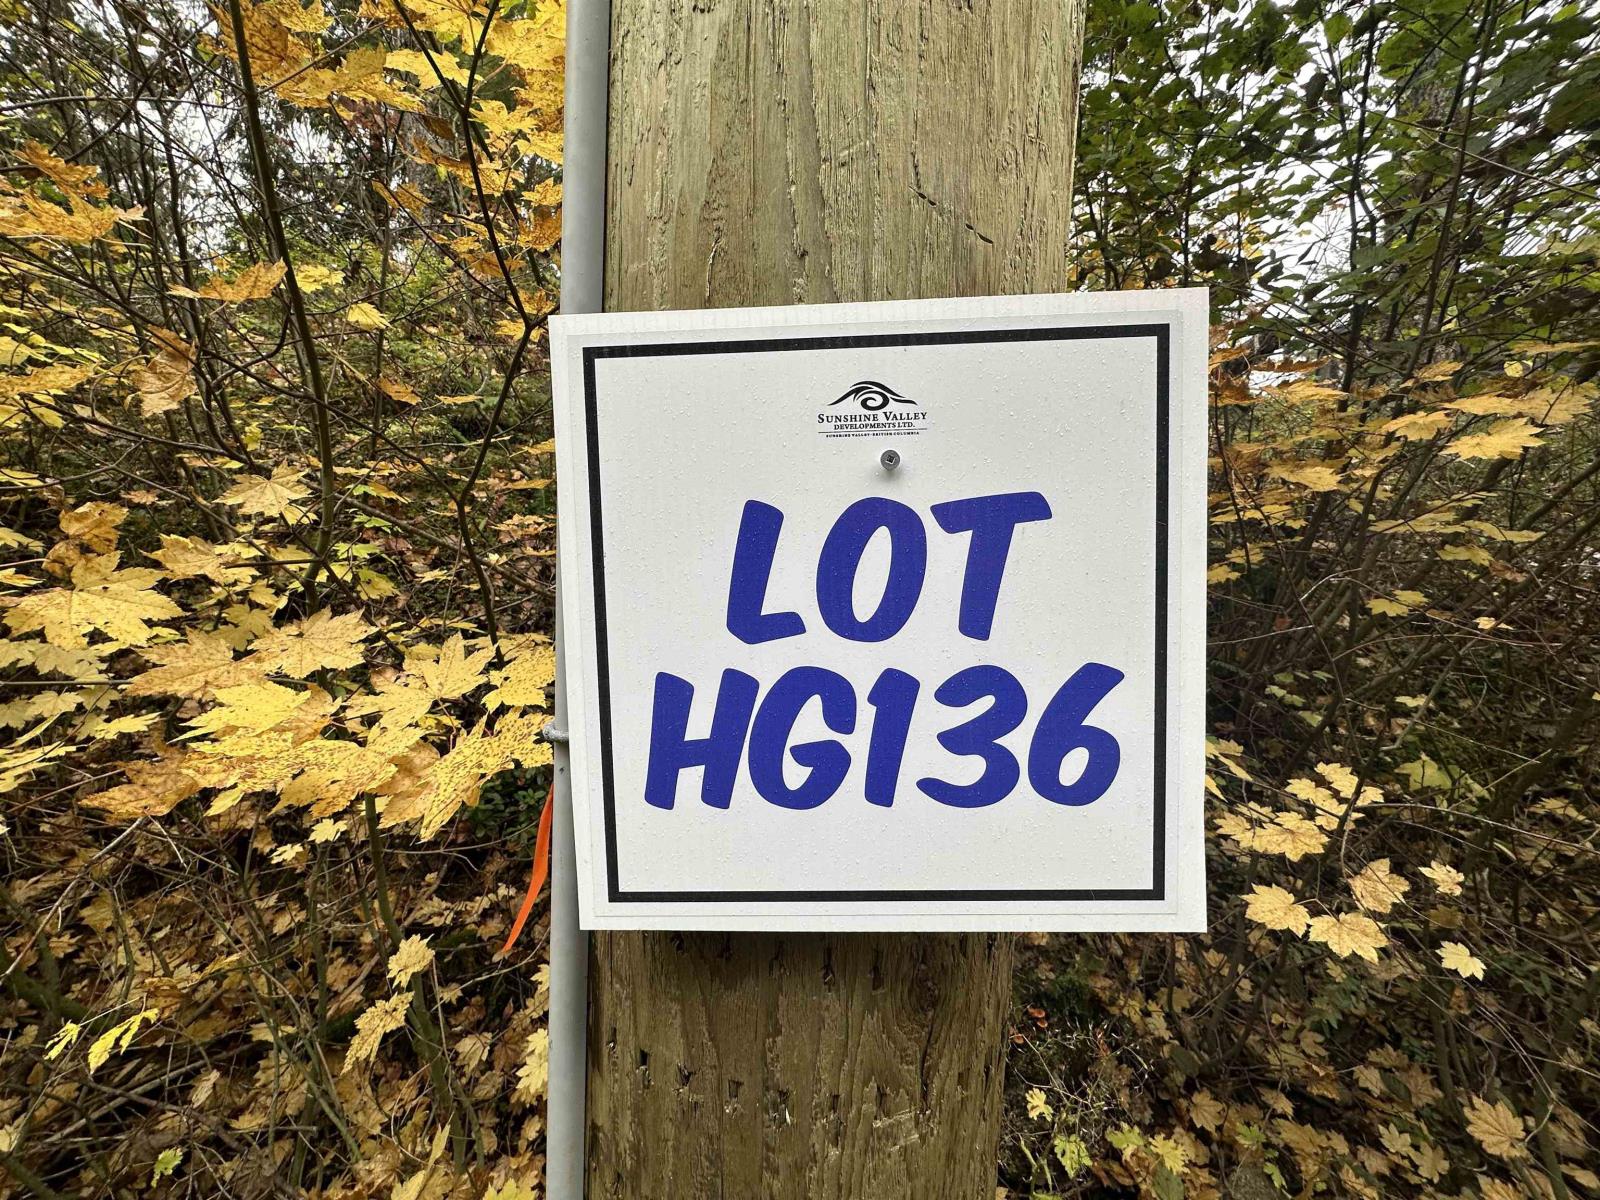 HG136 OLD HOPE PRINCETON HIGHWAY, hope, British Columbia